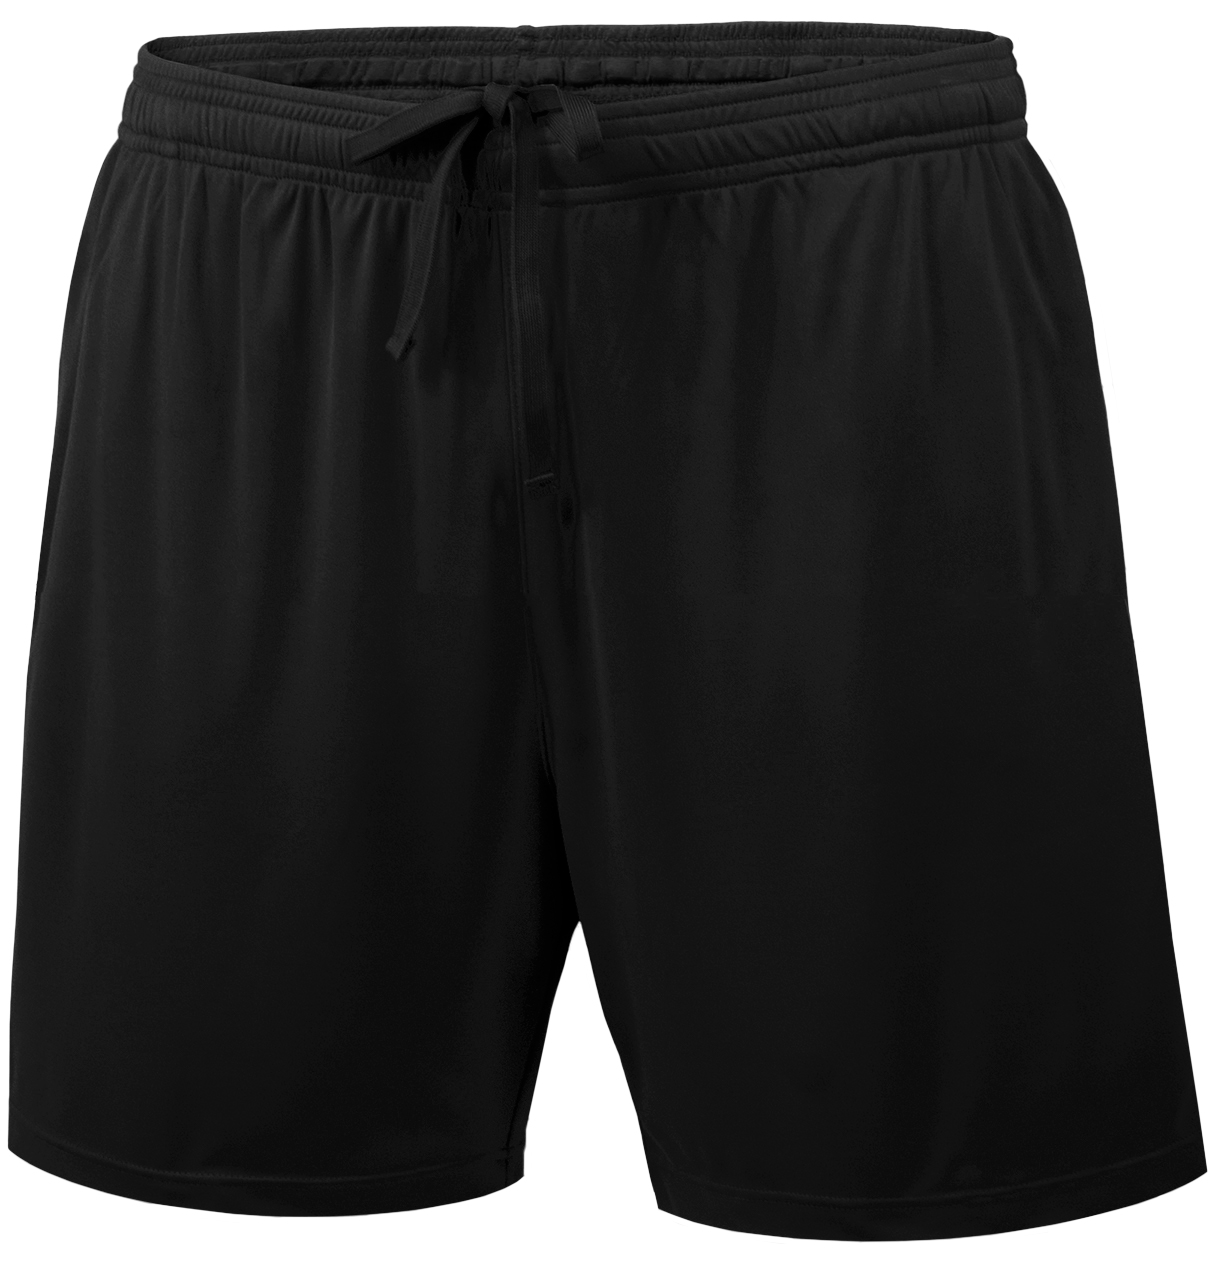 BAW Athletic Wear S715 - Men Xtreme-Tek Two Pocket 5" Short